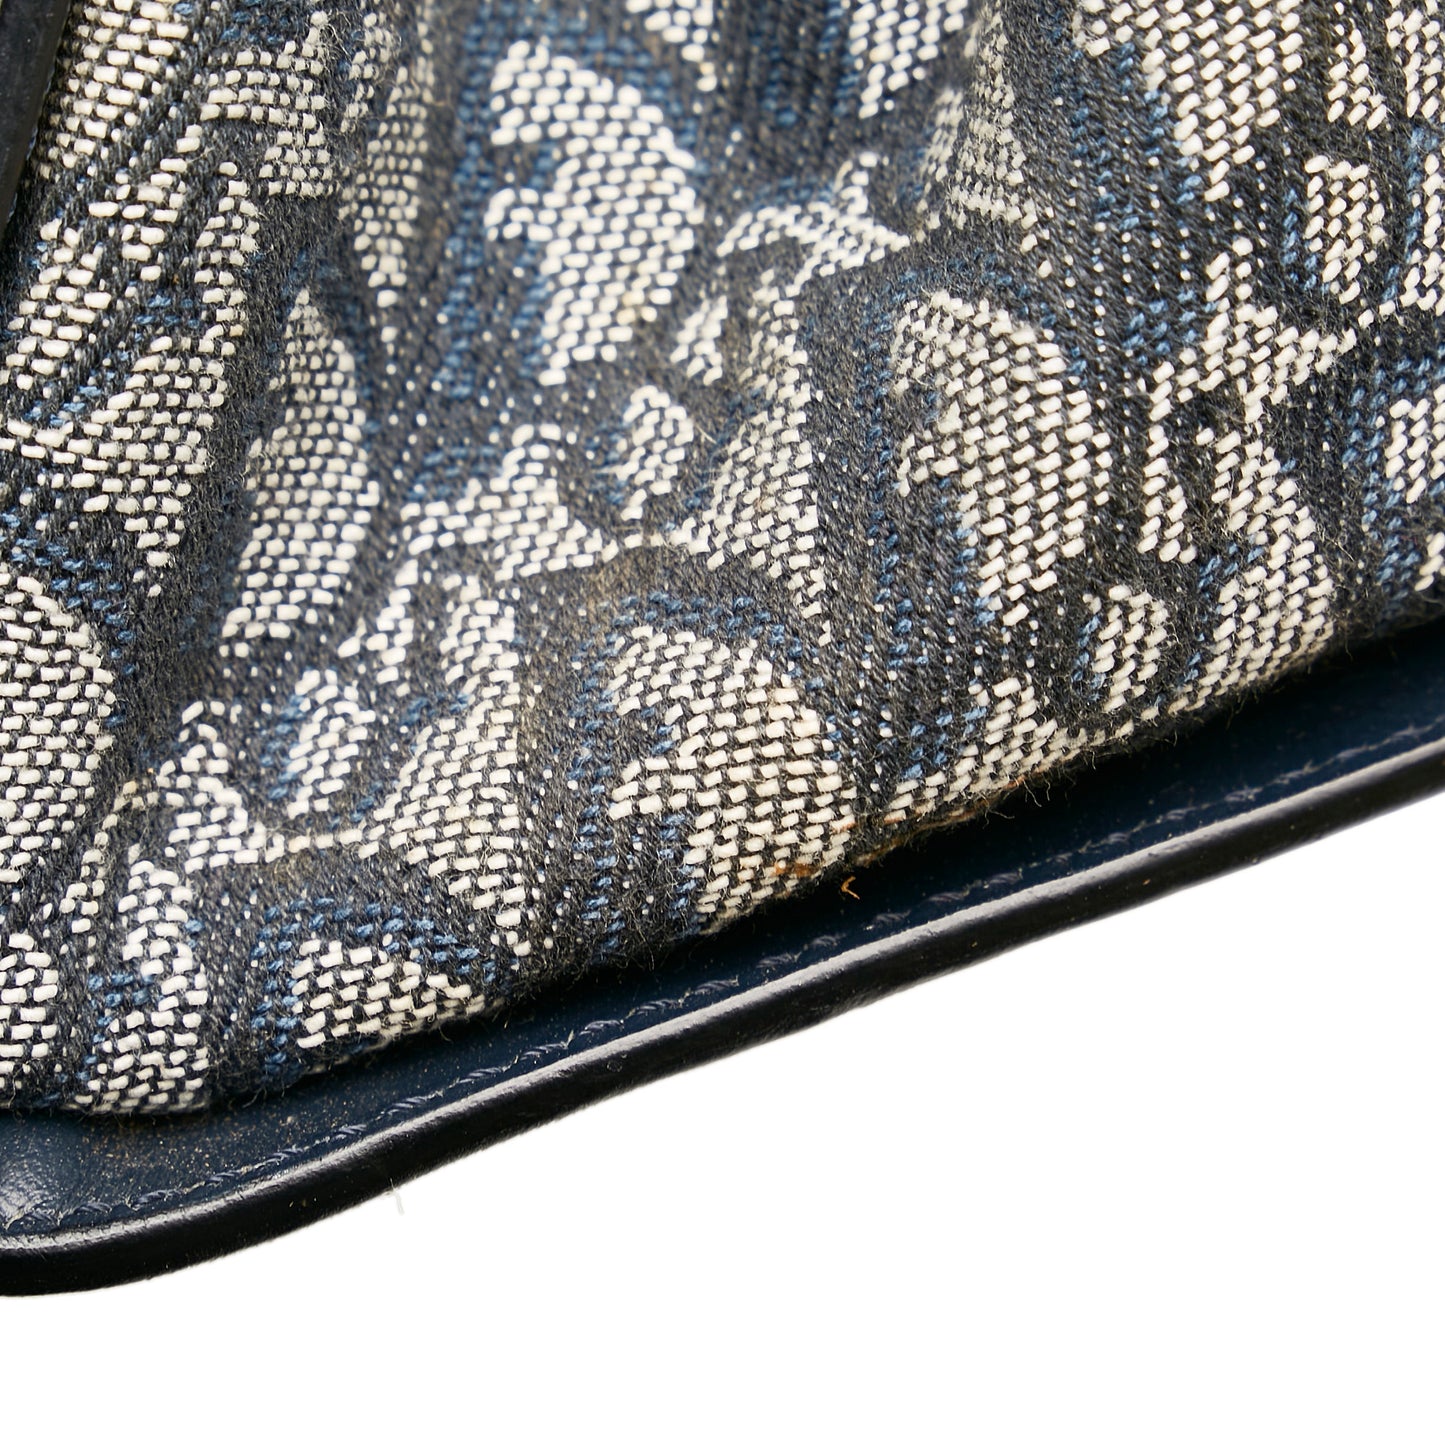 Dior Oblique Handbag